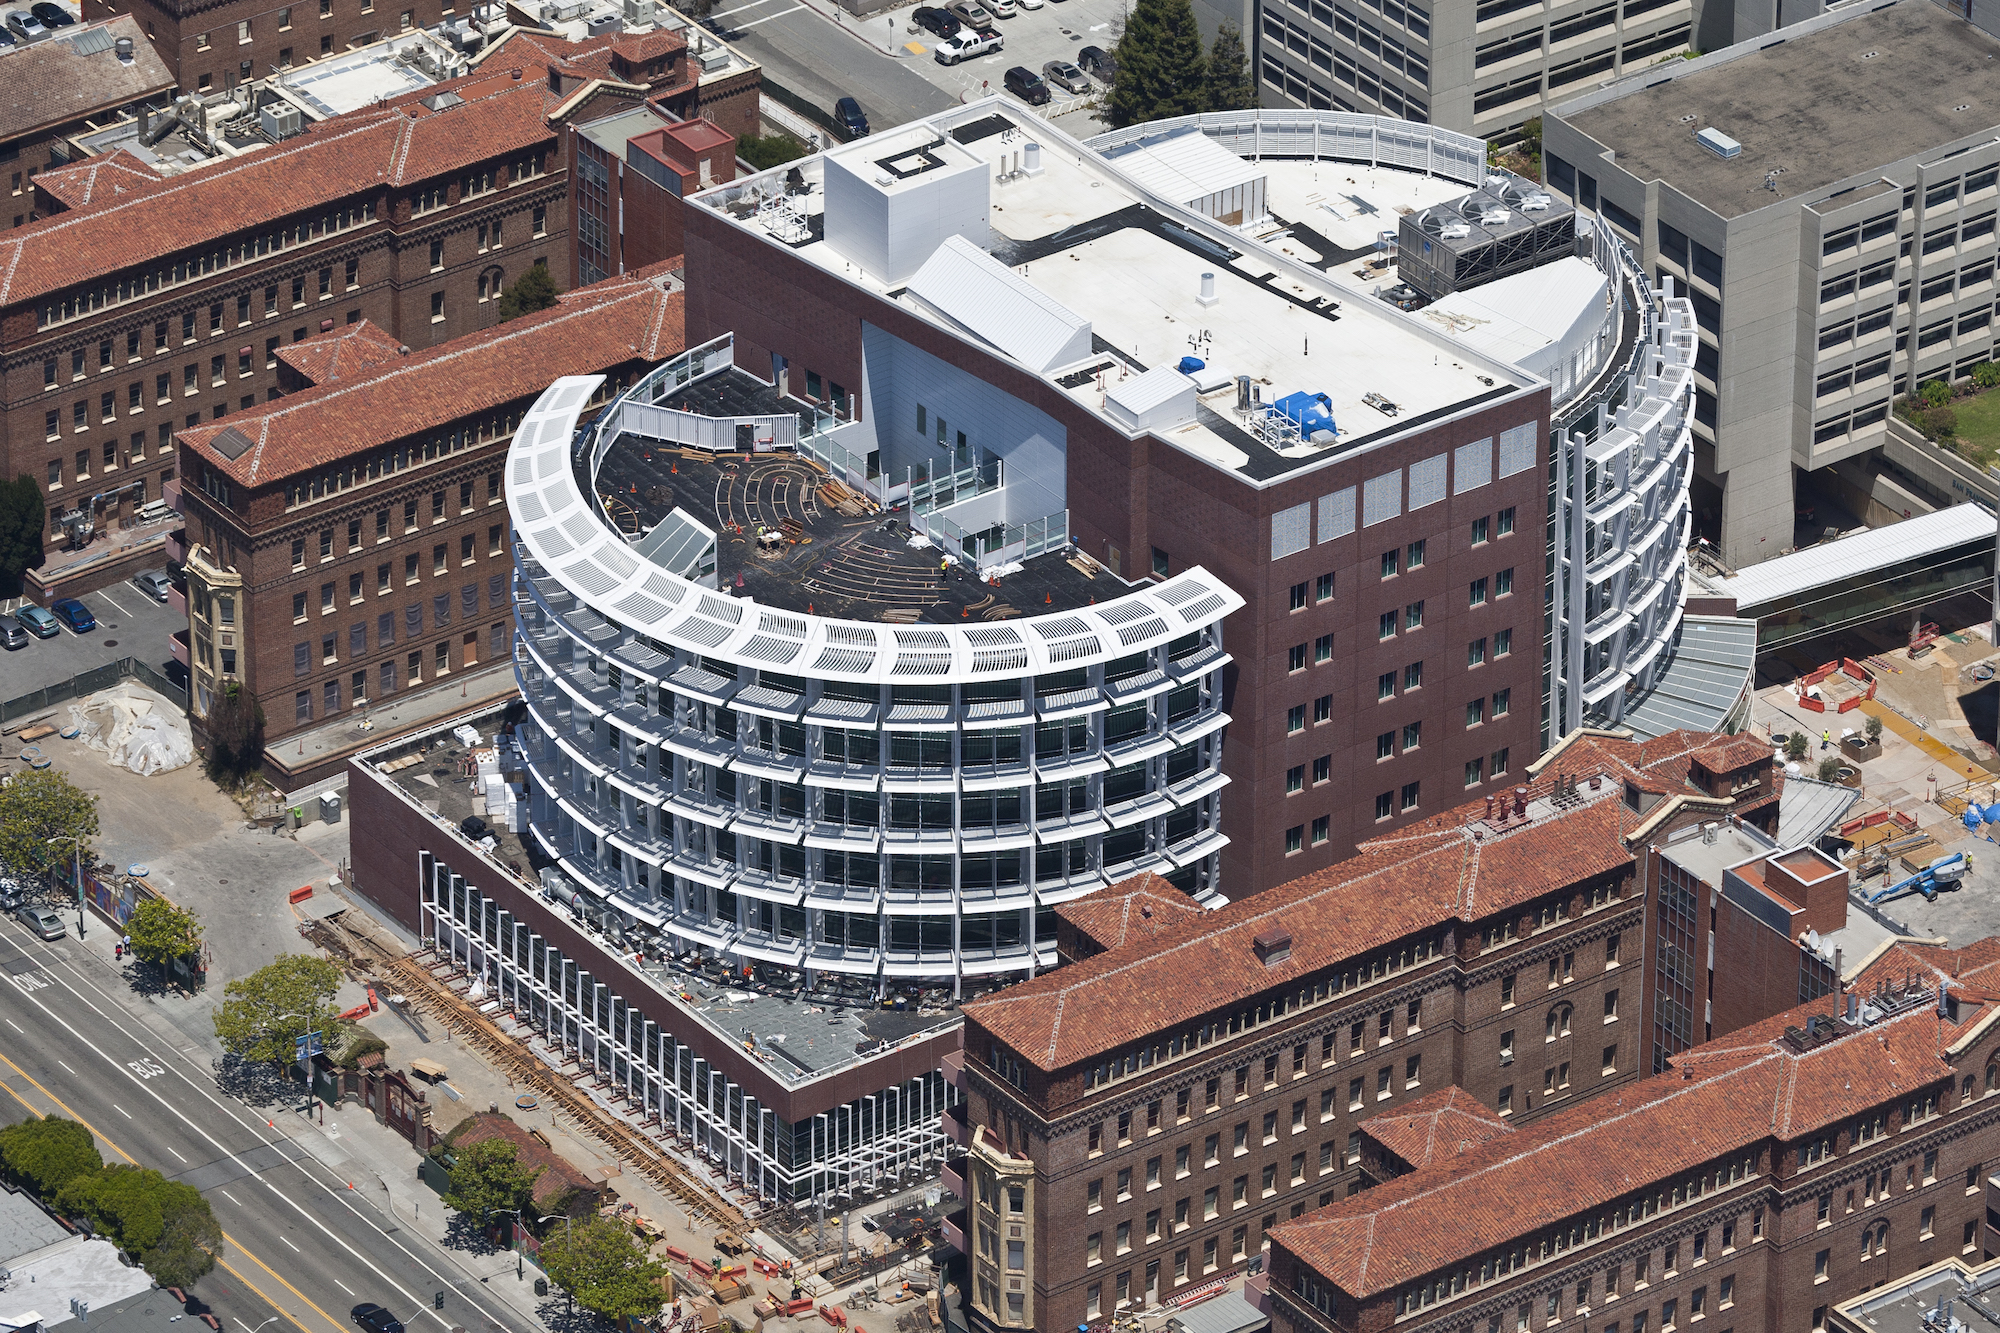 New Level One Trauma Center at Zuckerberg San Francisco General Hospital